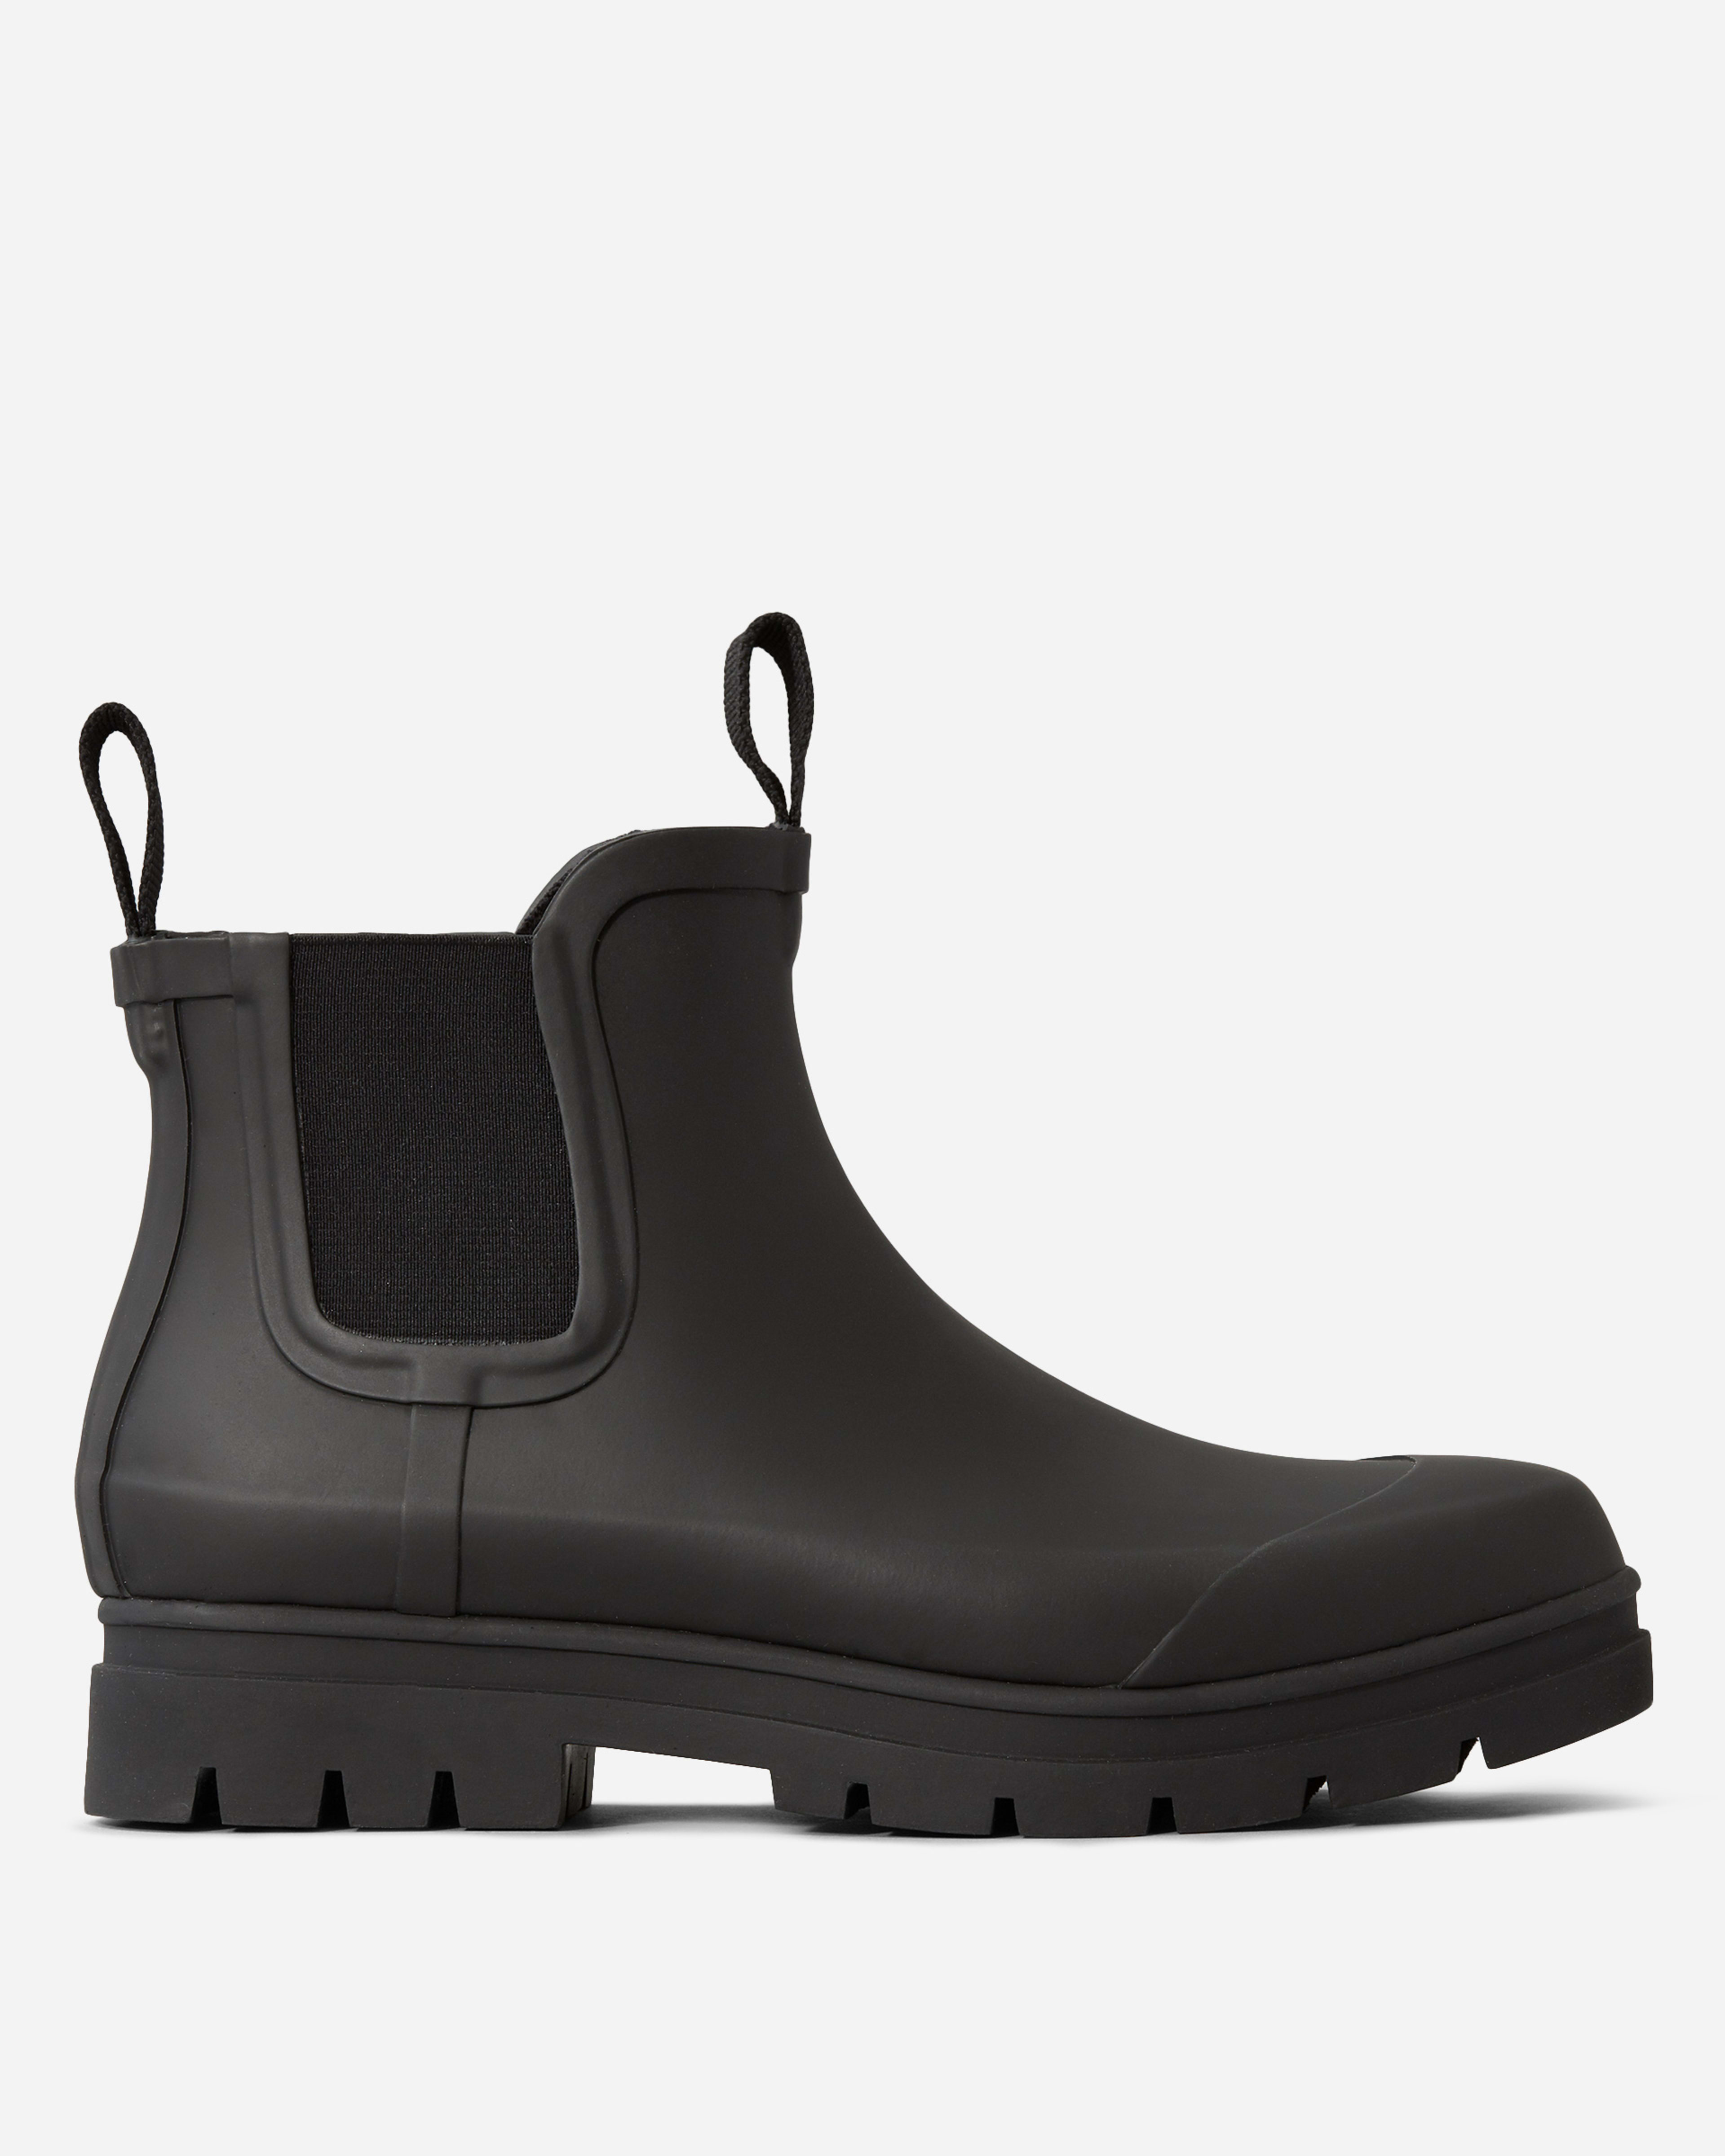 Everlane Chelsea Rain Boots in Black, Size 5